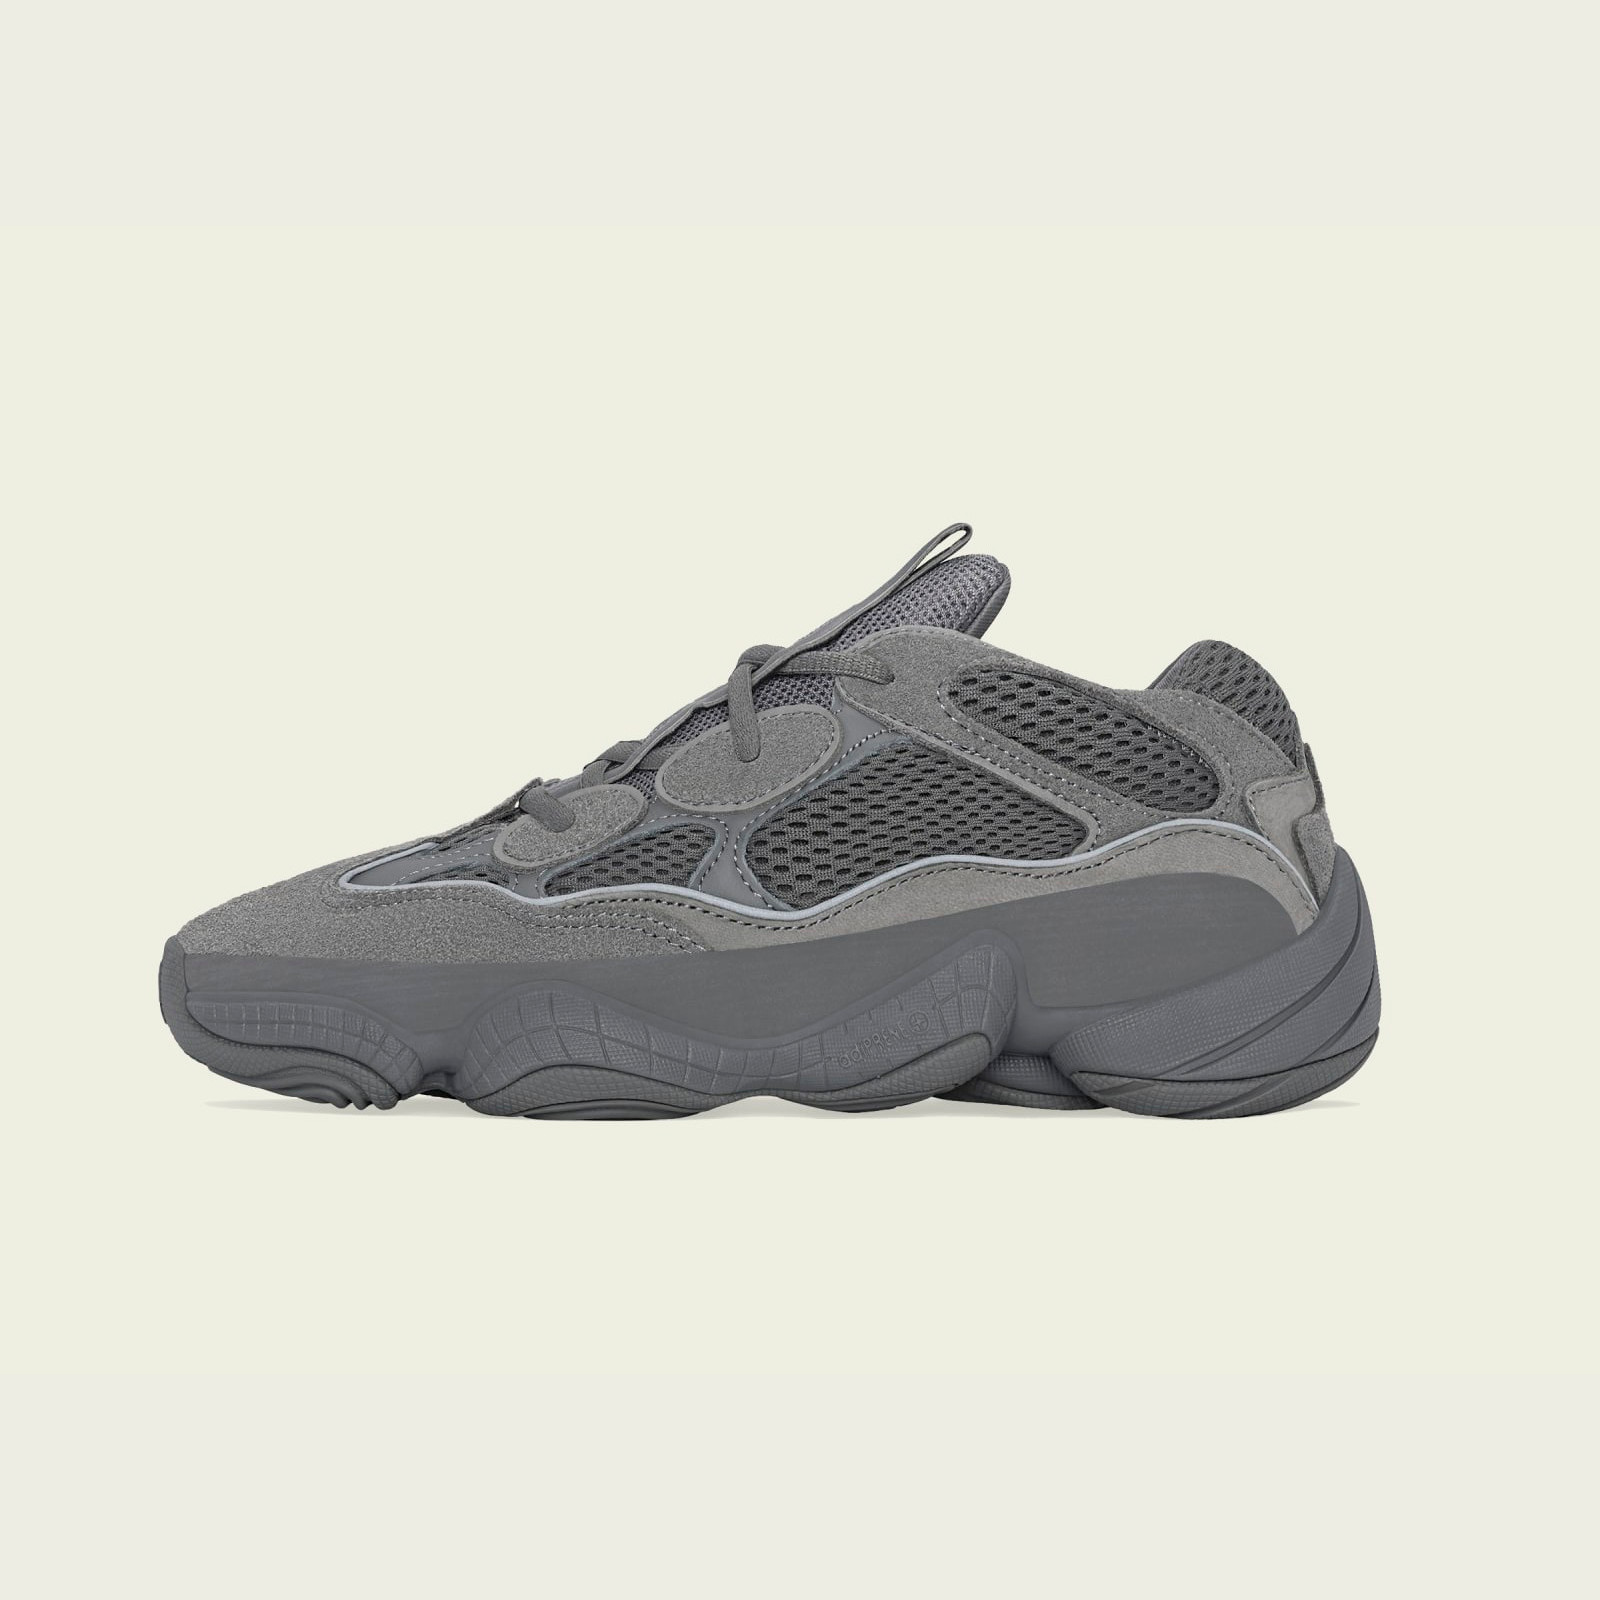 Adidas Yeezy 500
« Granite »